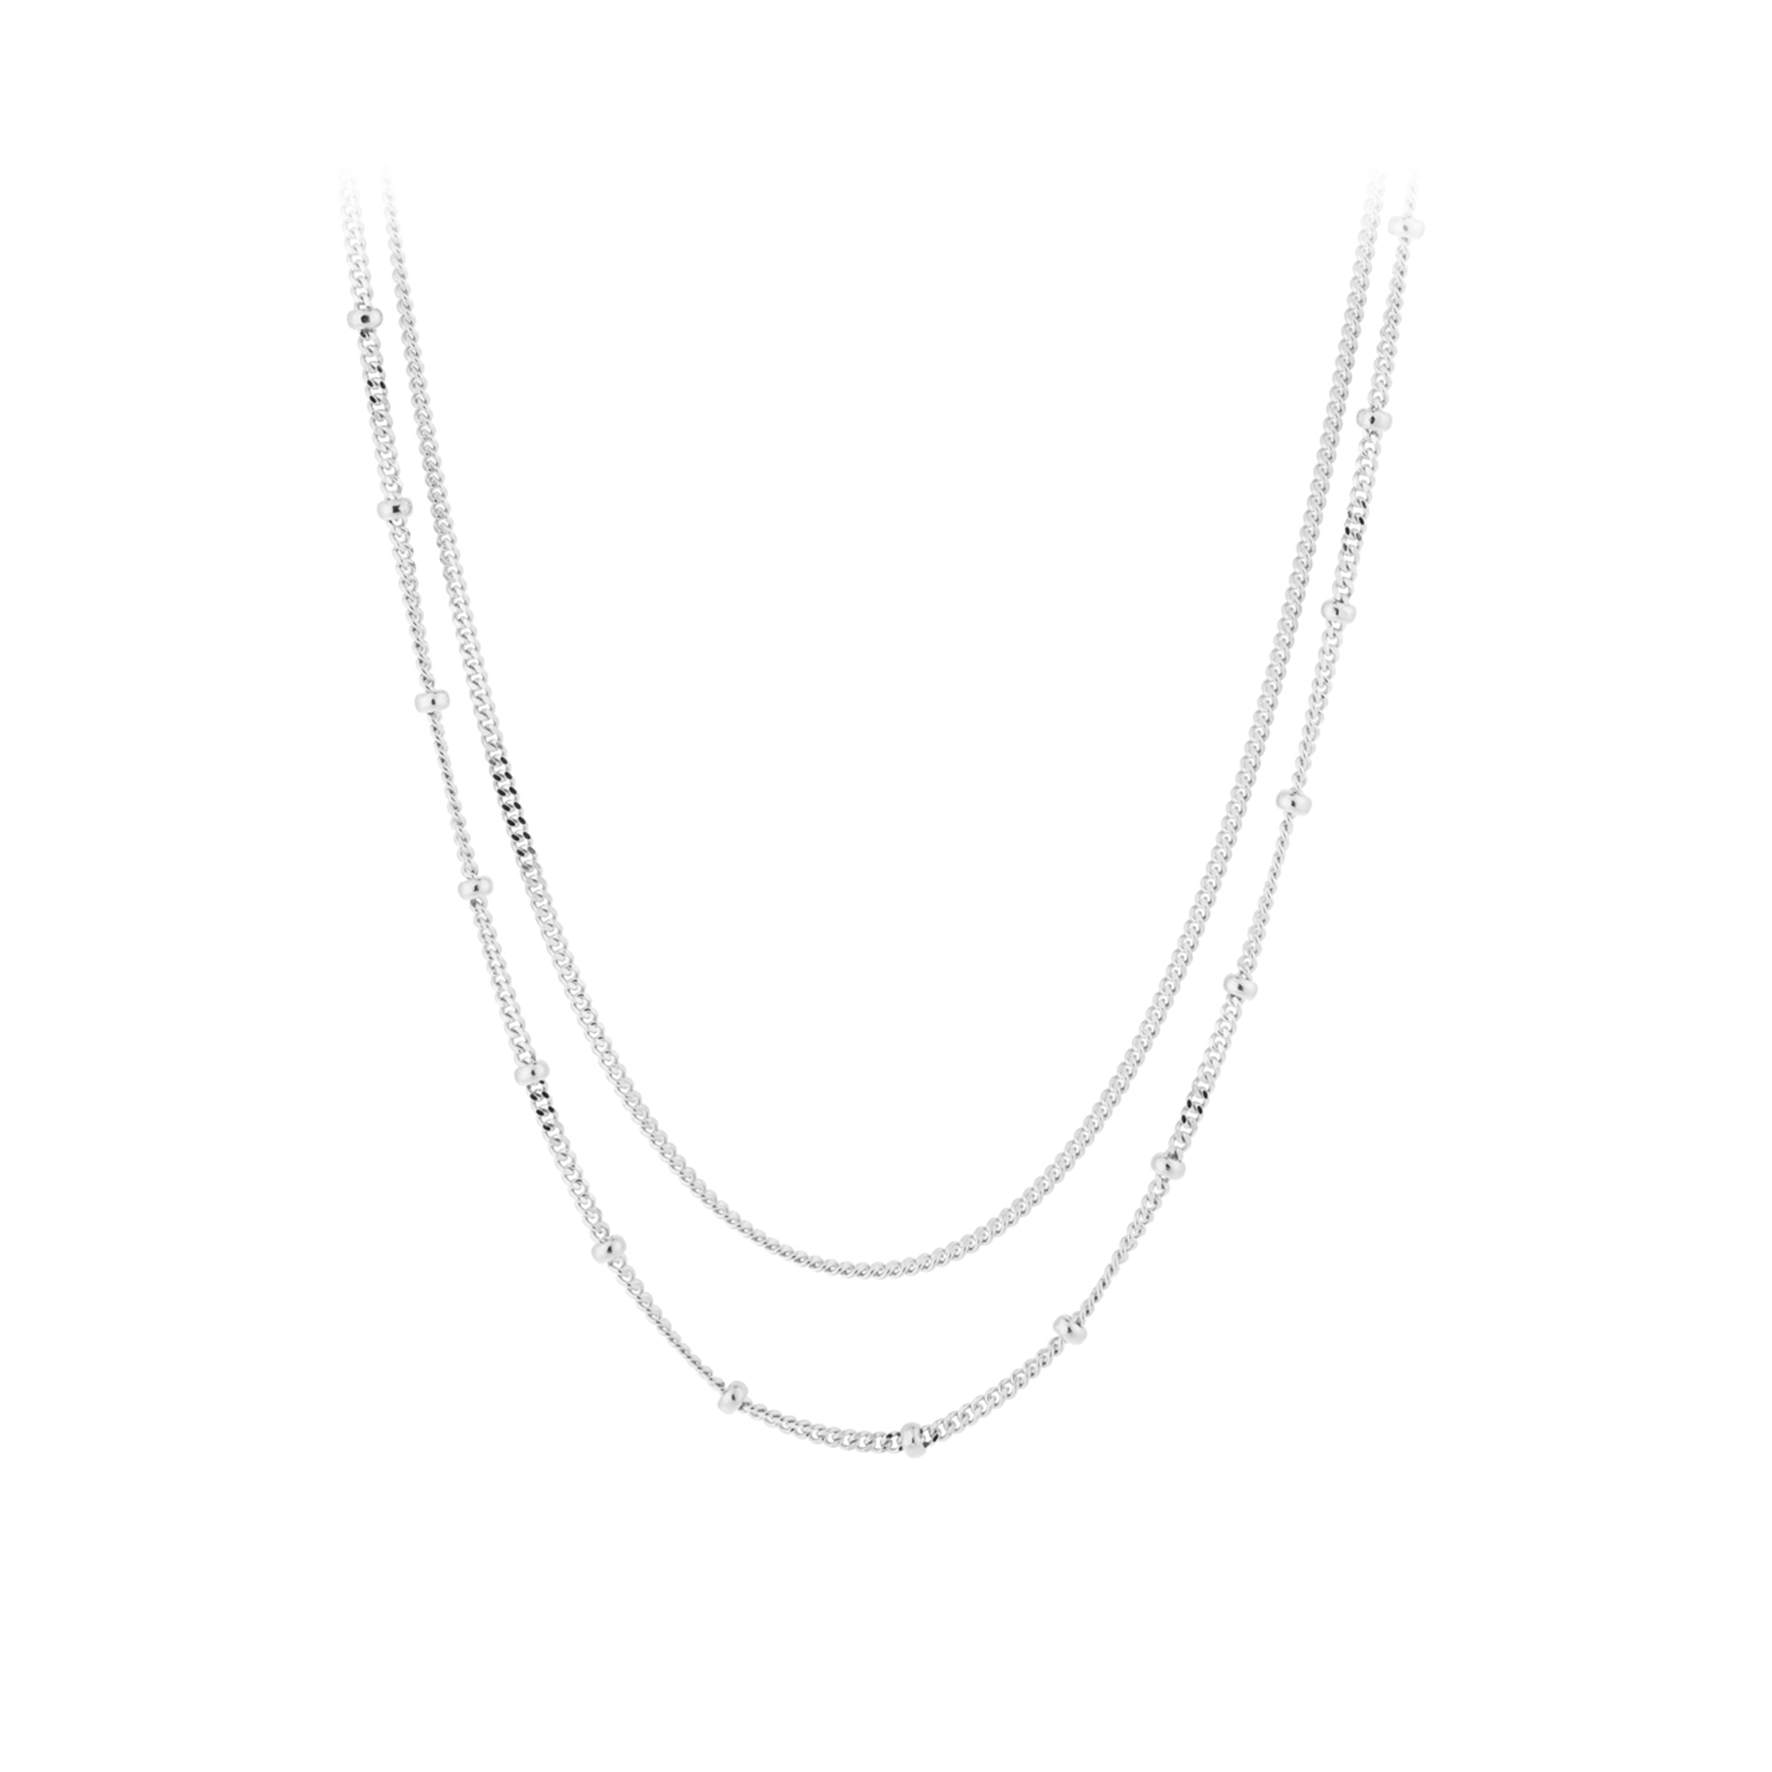 Galaxy Necklace von Pernille Corydon in Silber Sterling 925